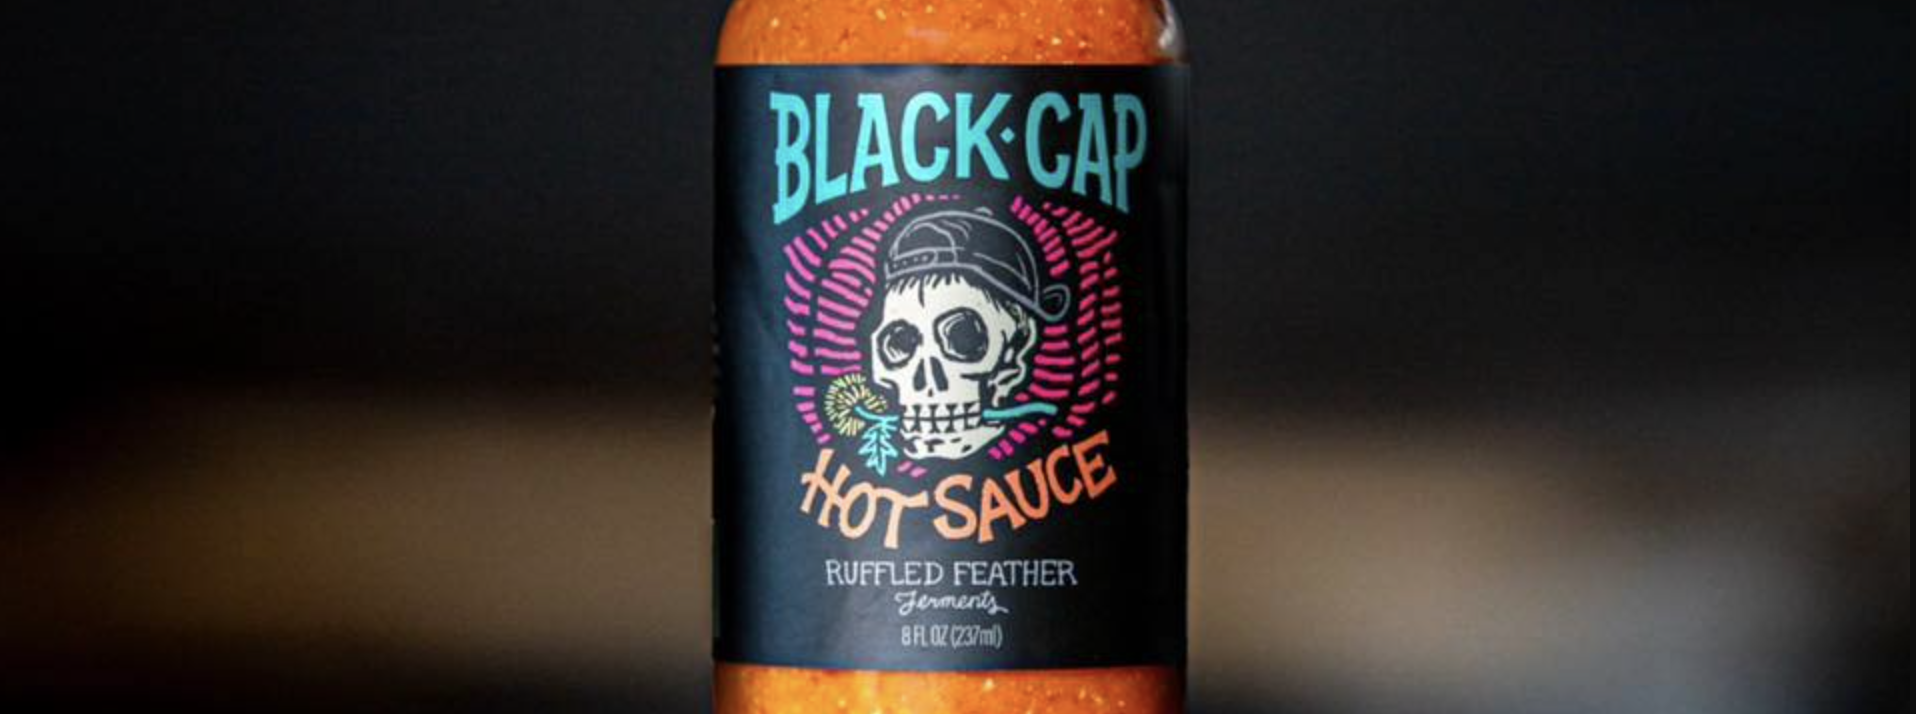 Black Cap Hot Sauce's banner